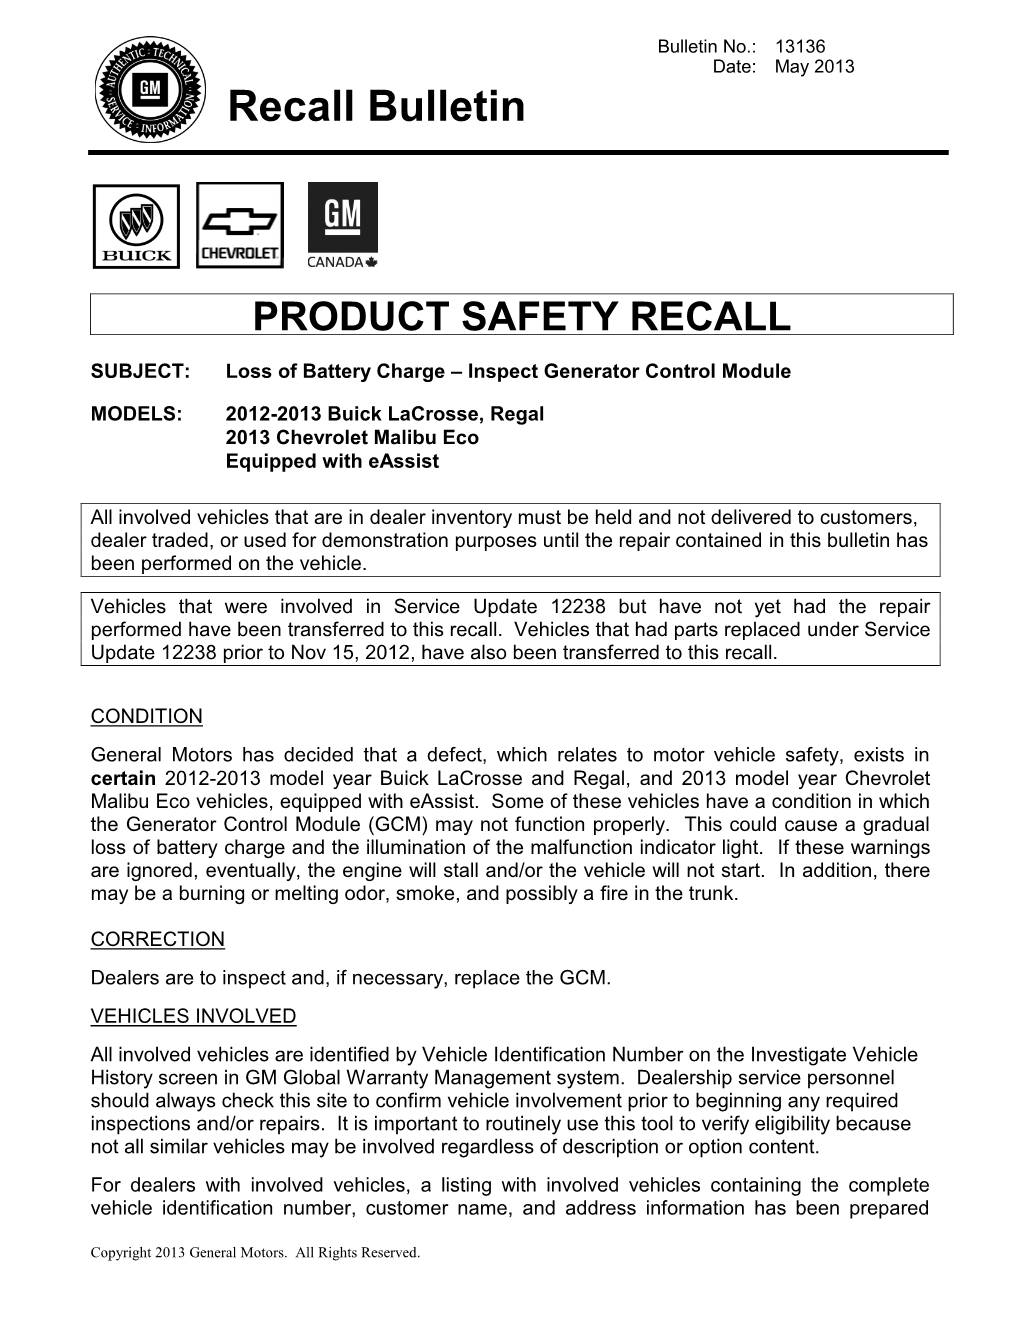 2013 May GM Safety Recall Bulletin 13136